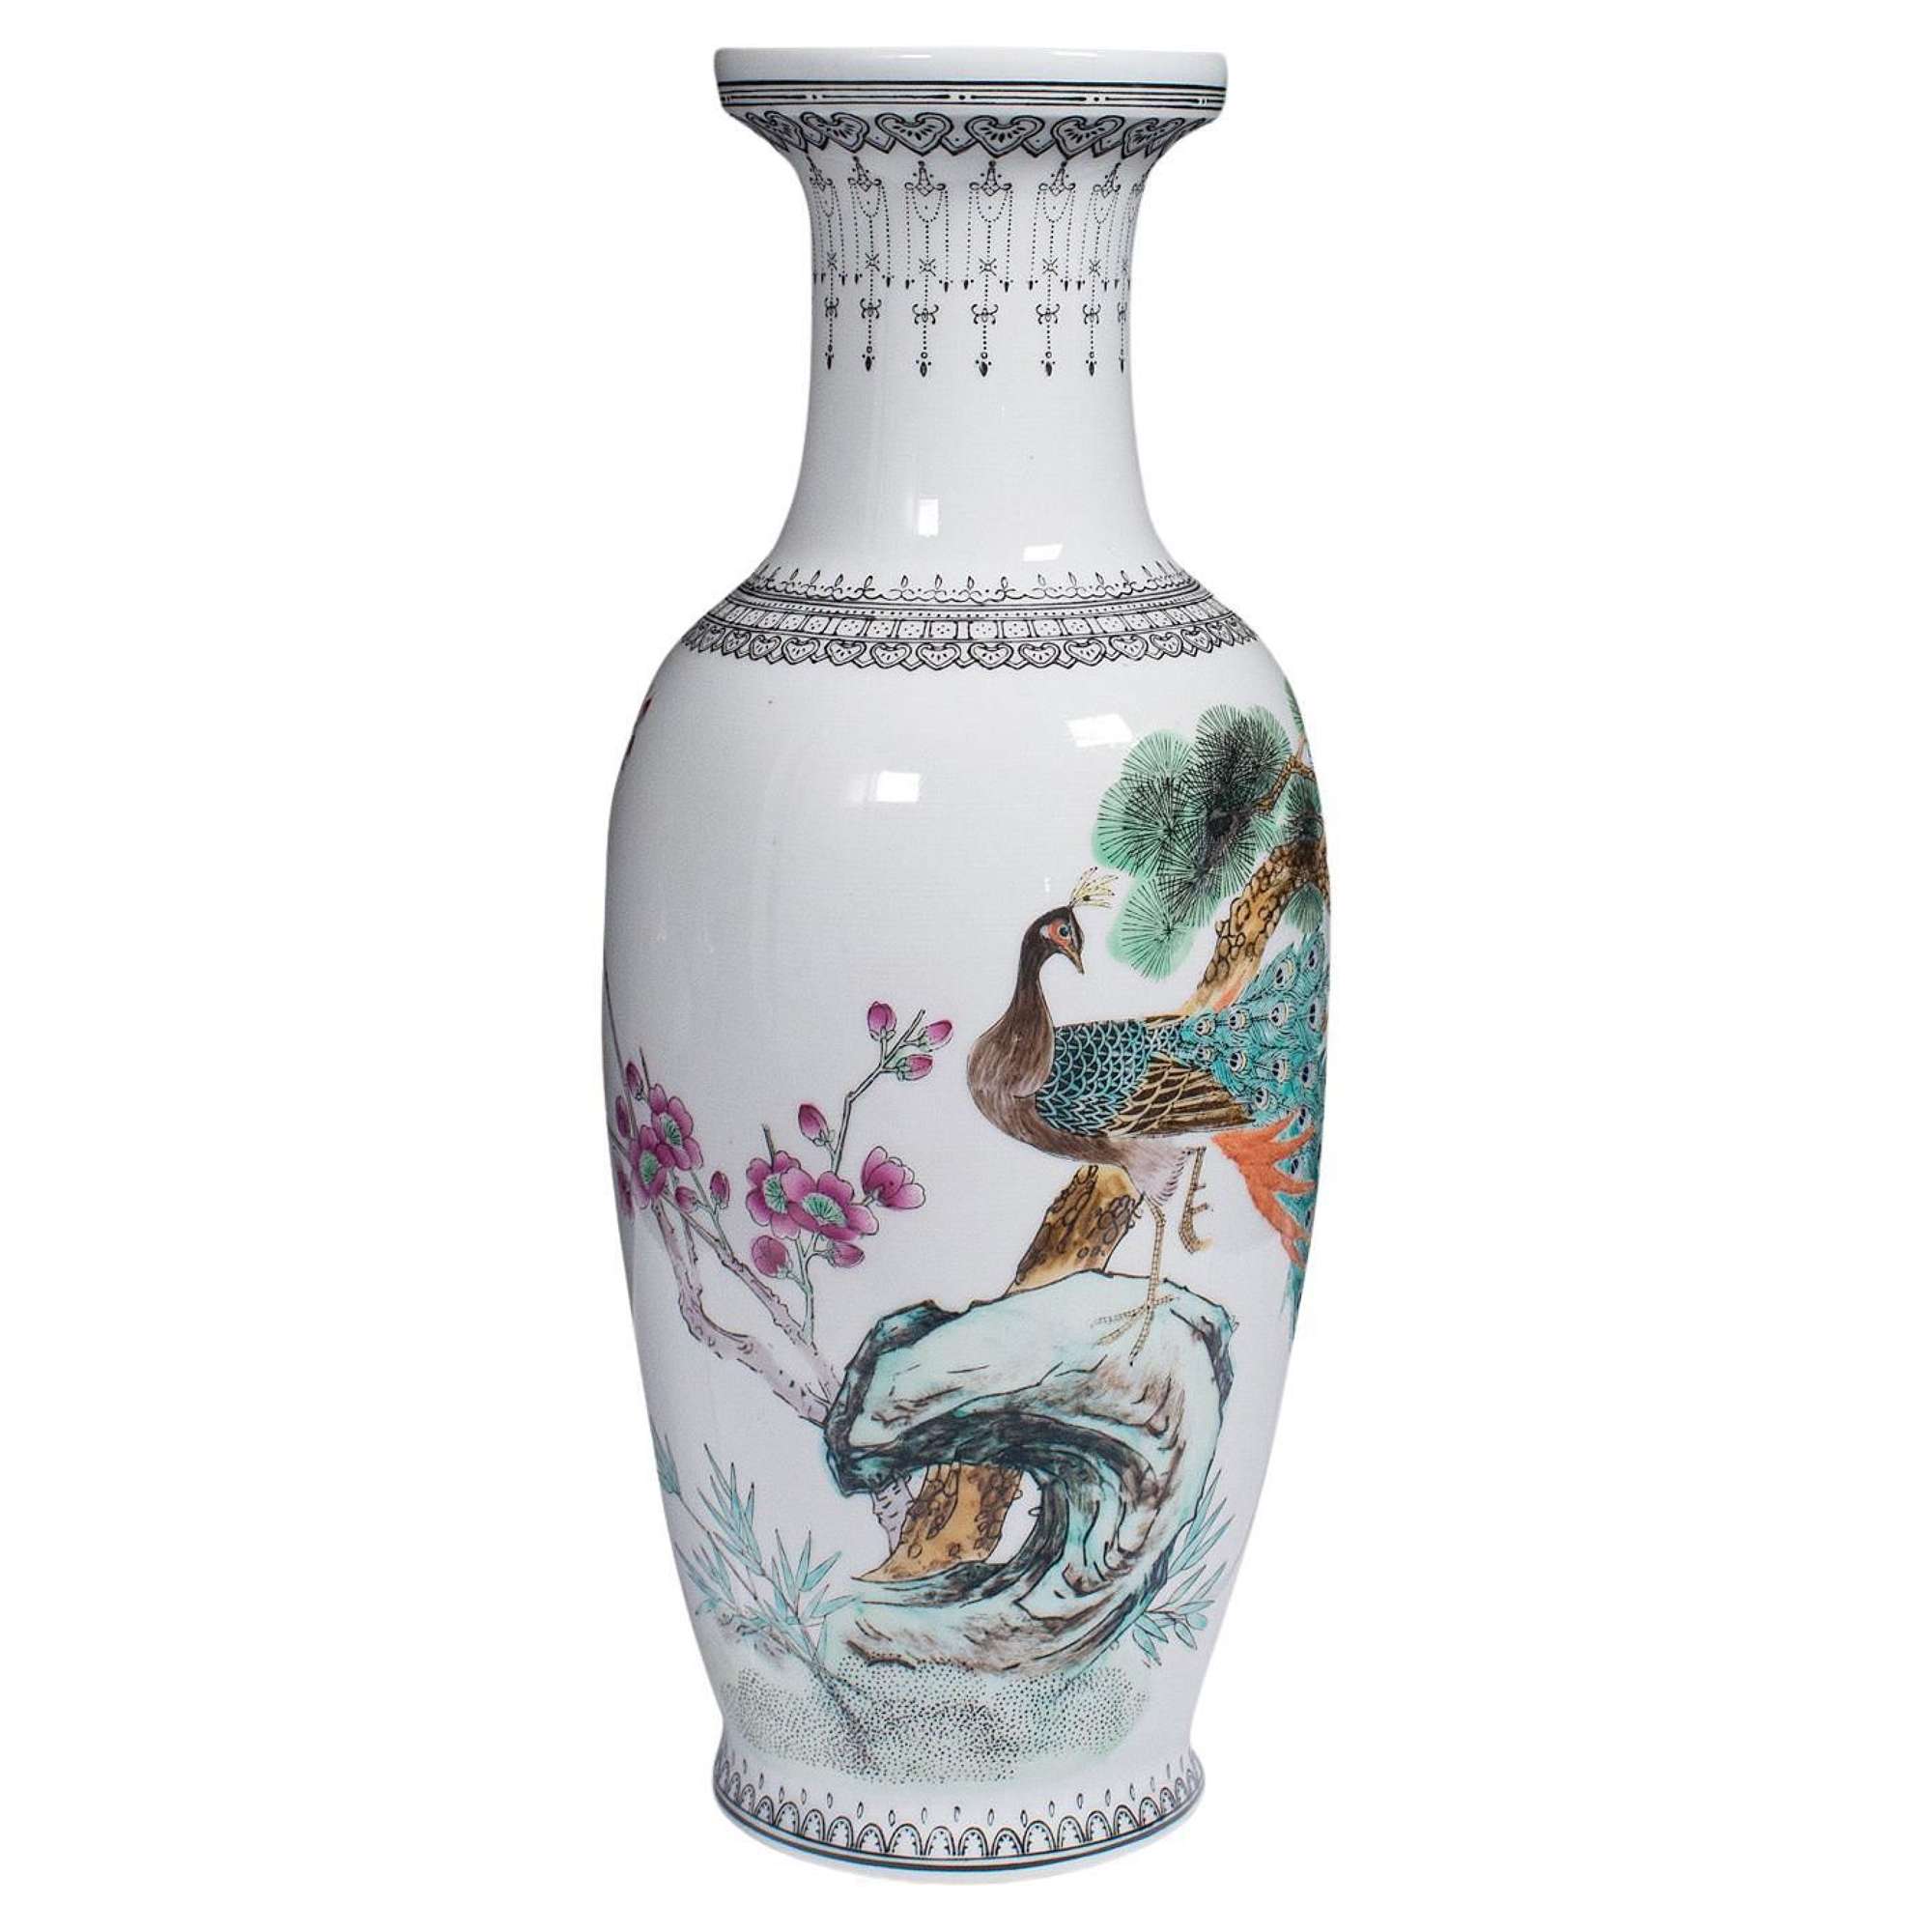 Vintage Flower Vase, Chinese, Ceramic, Decorative Urn, Peacock Motif, circa 1960